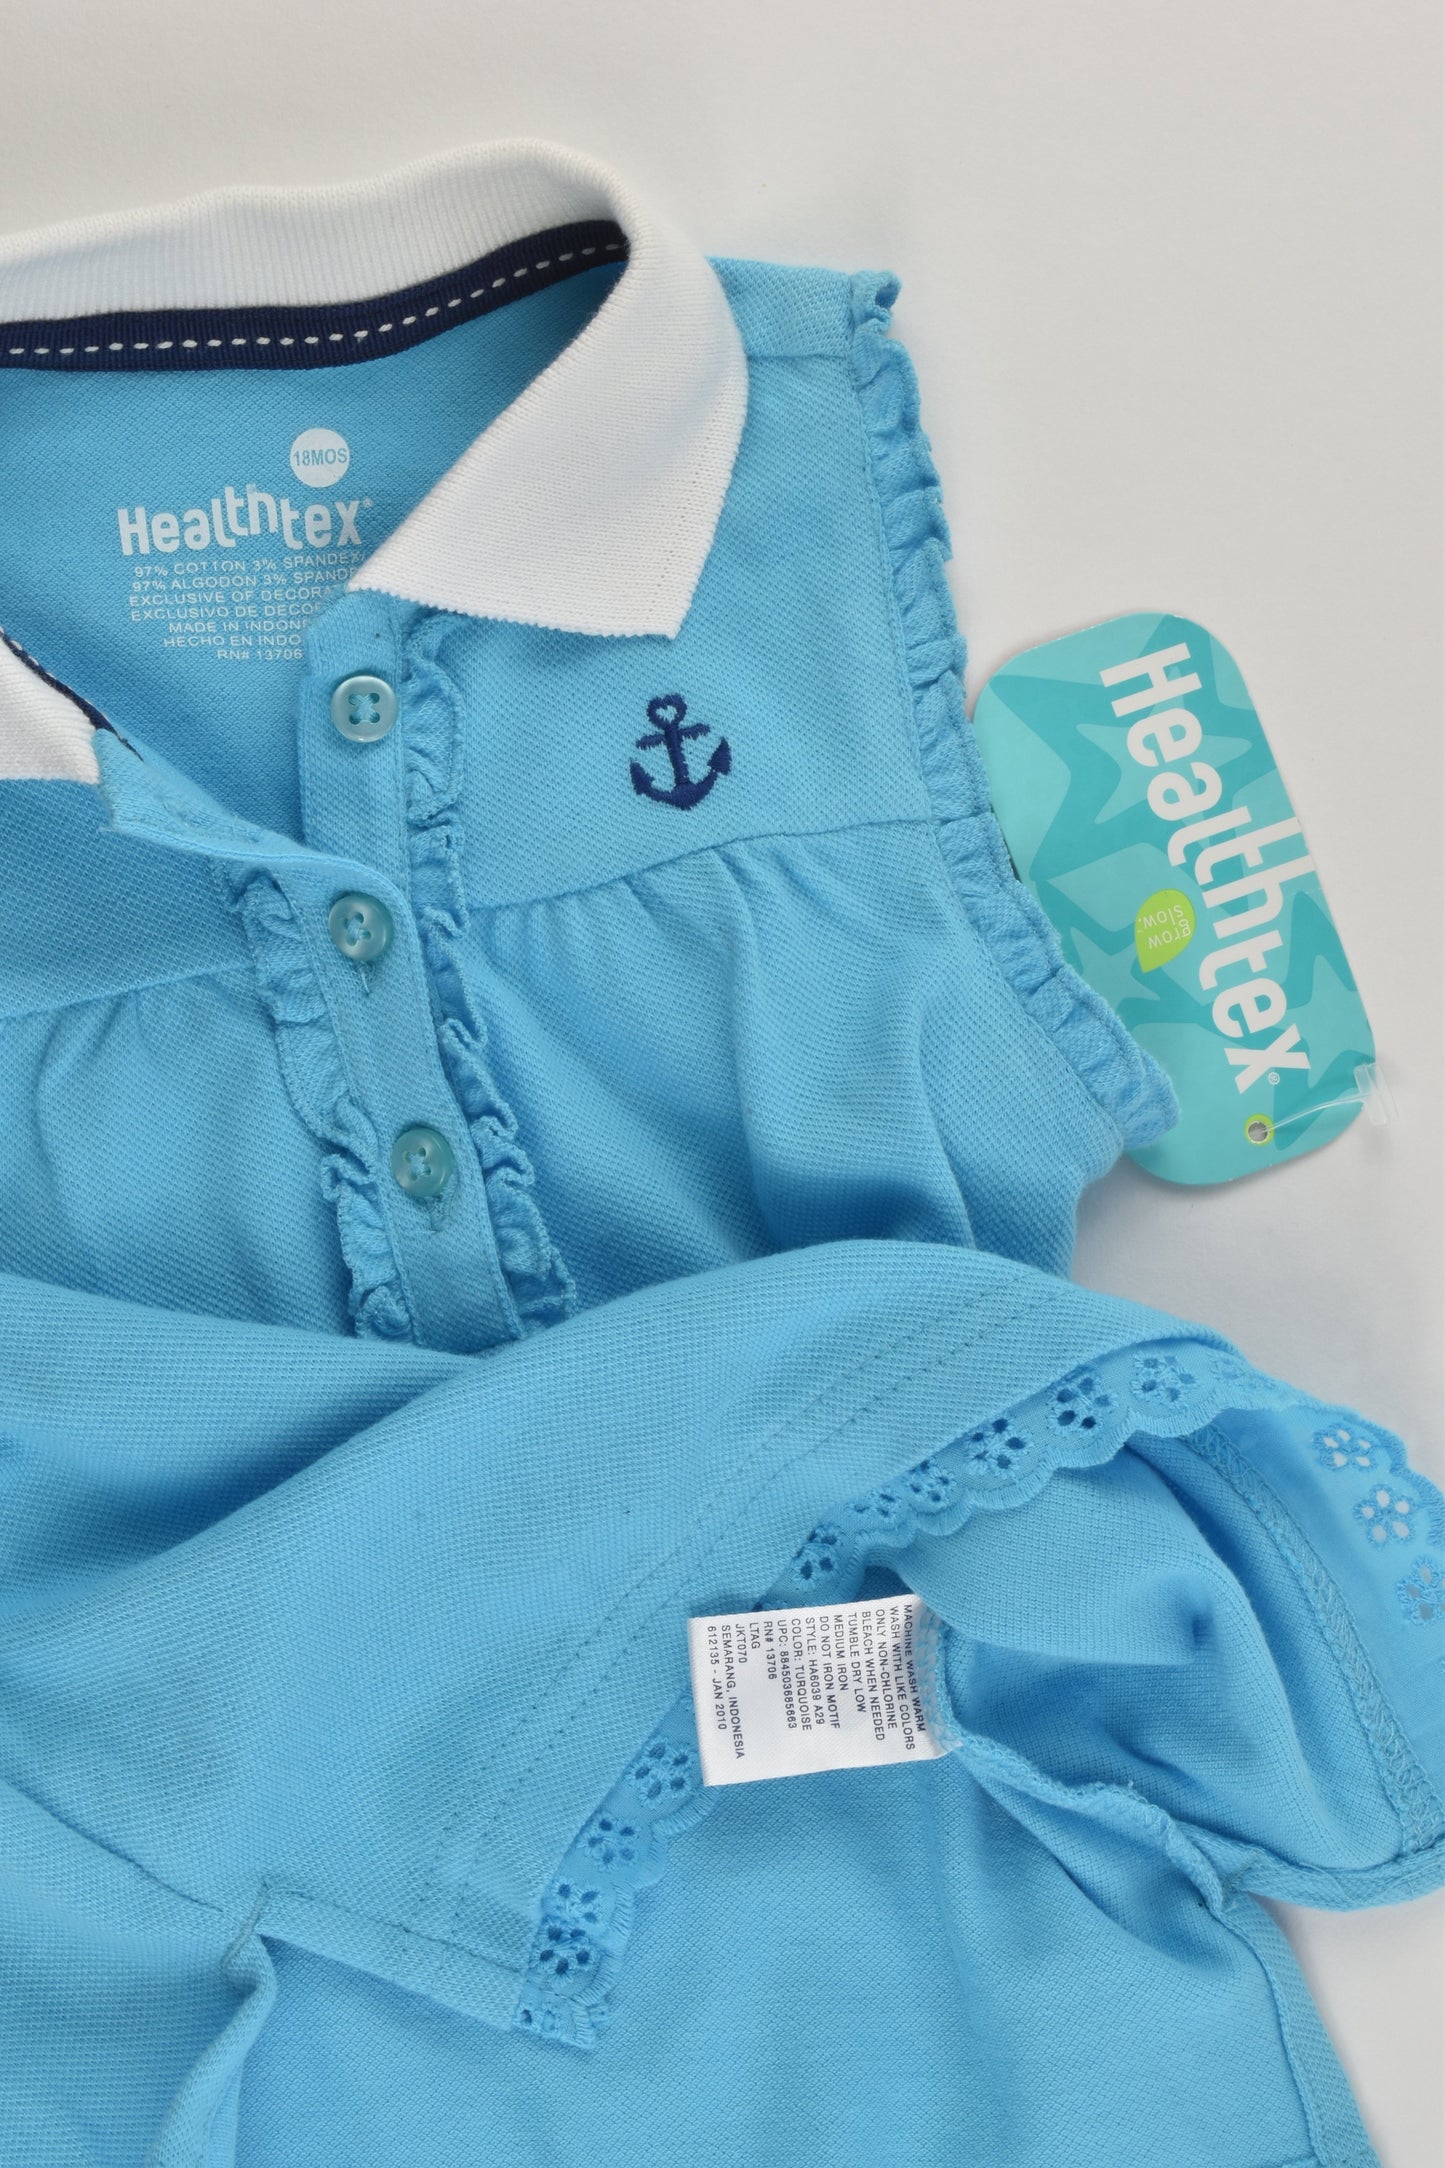 NEW Healthtex Size 1 (18 months) Nautical Polo Shirt